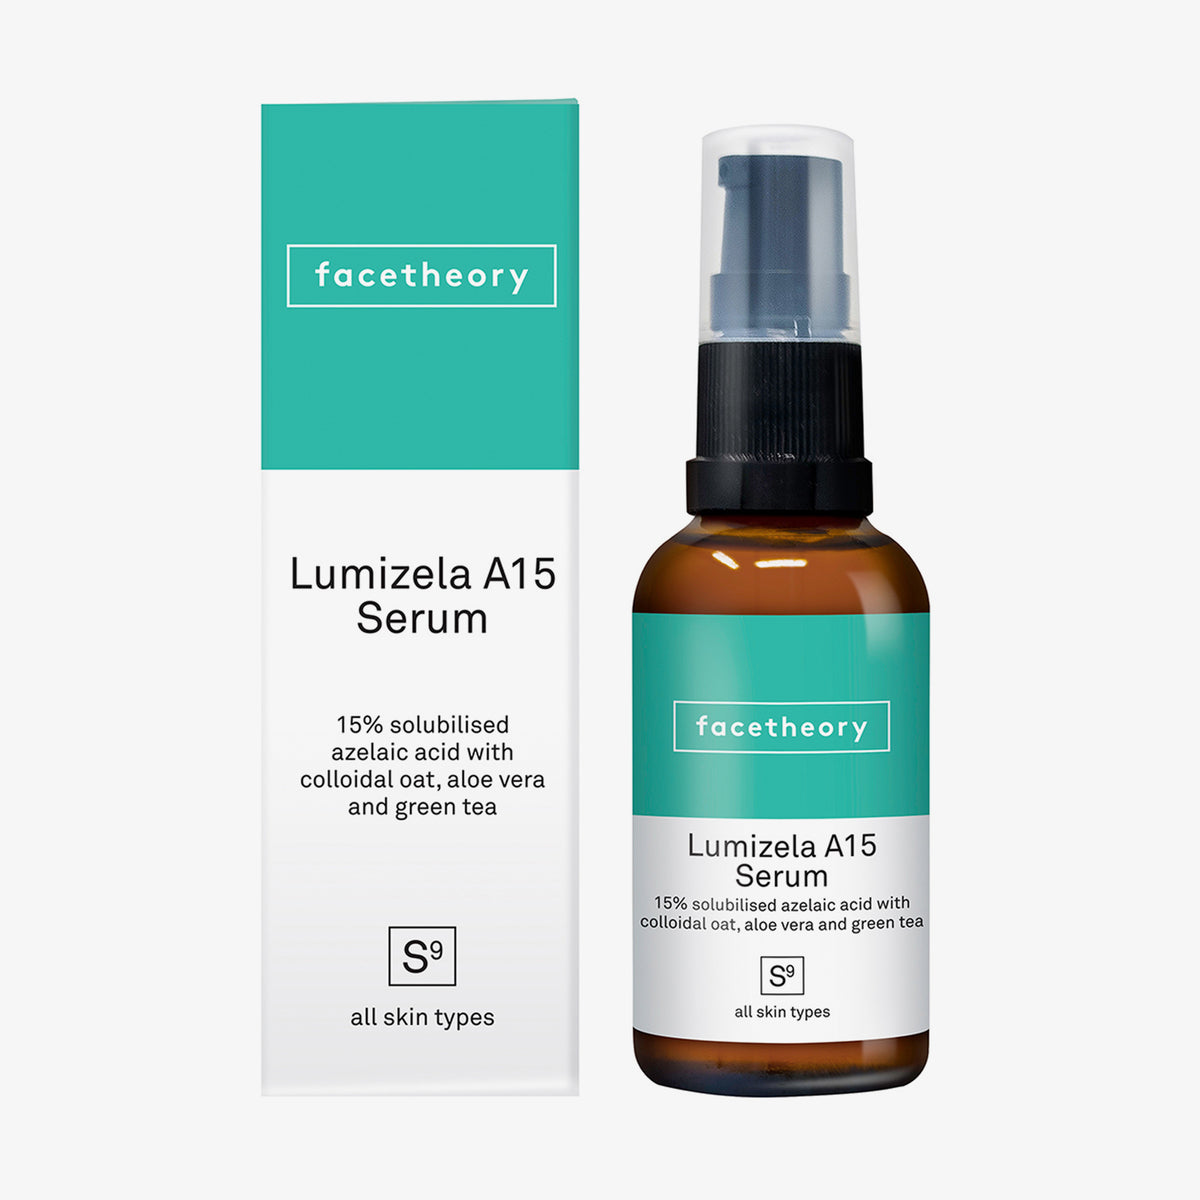 facetheory | Lumizela A15 Azelaic Acid Serum